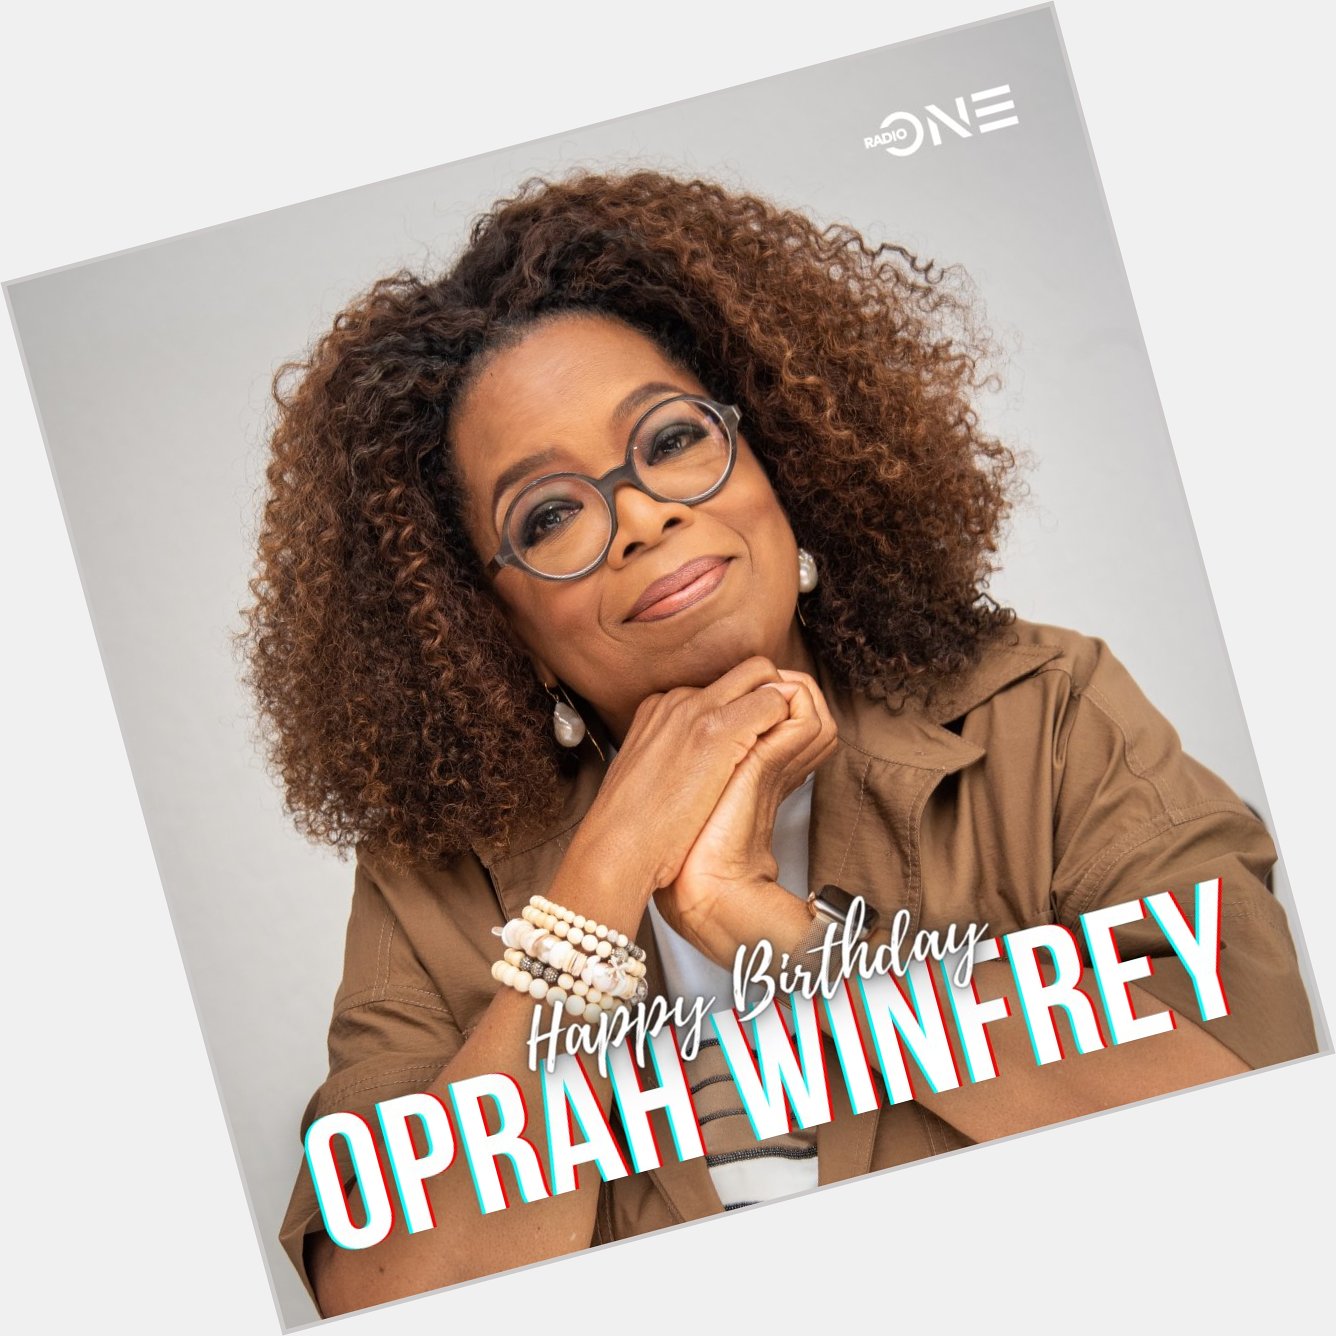 Wishing Oprah Winfrey a happy 67th birthday today 